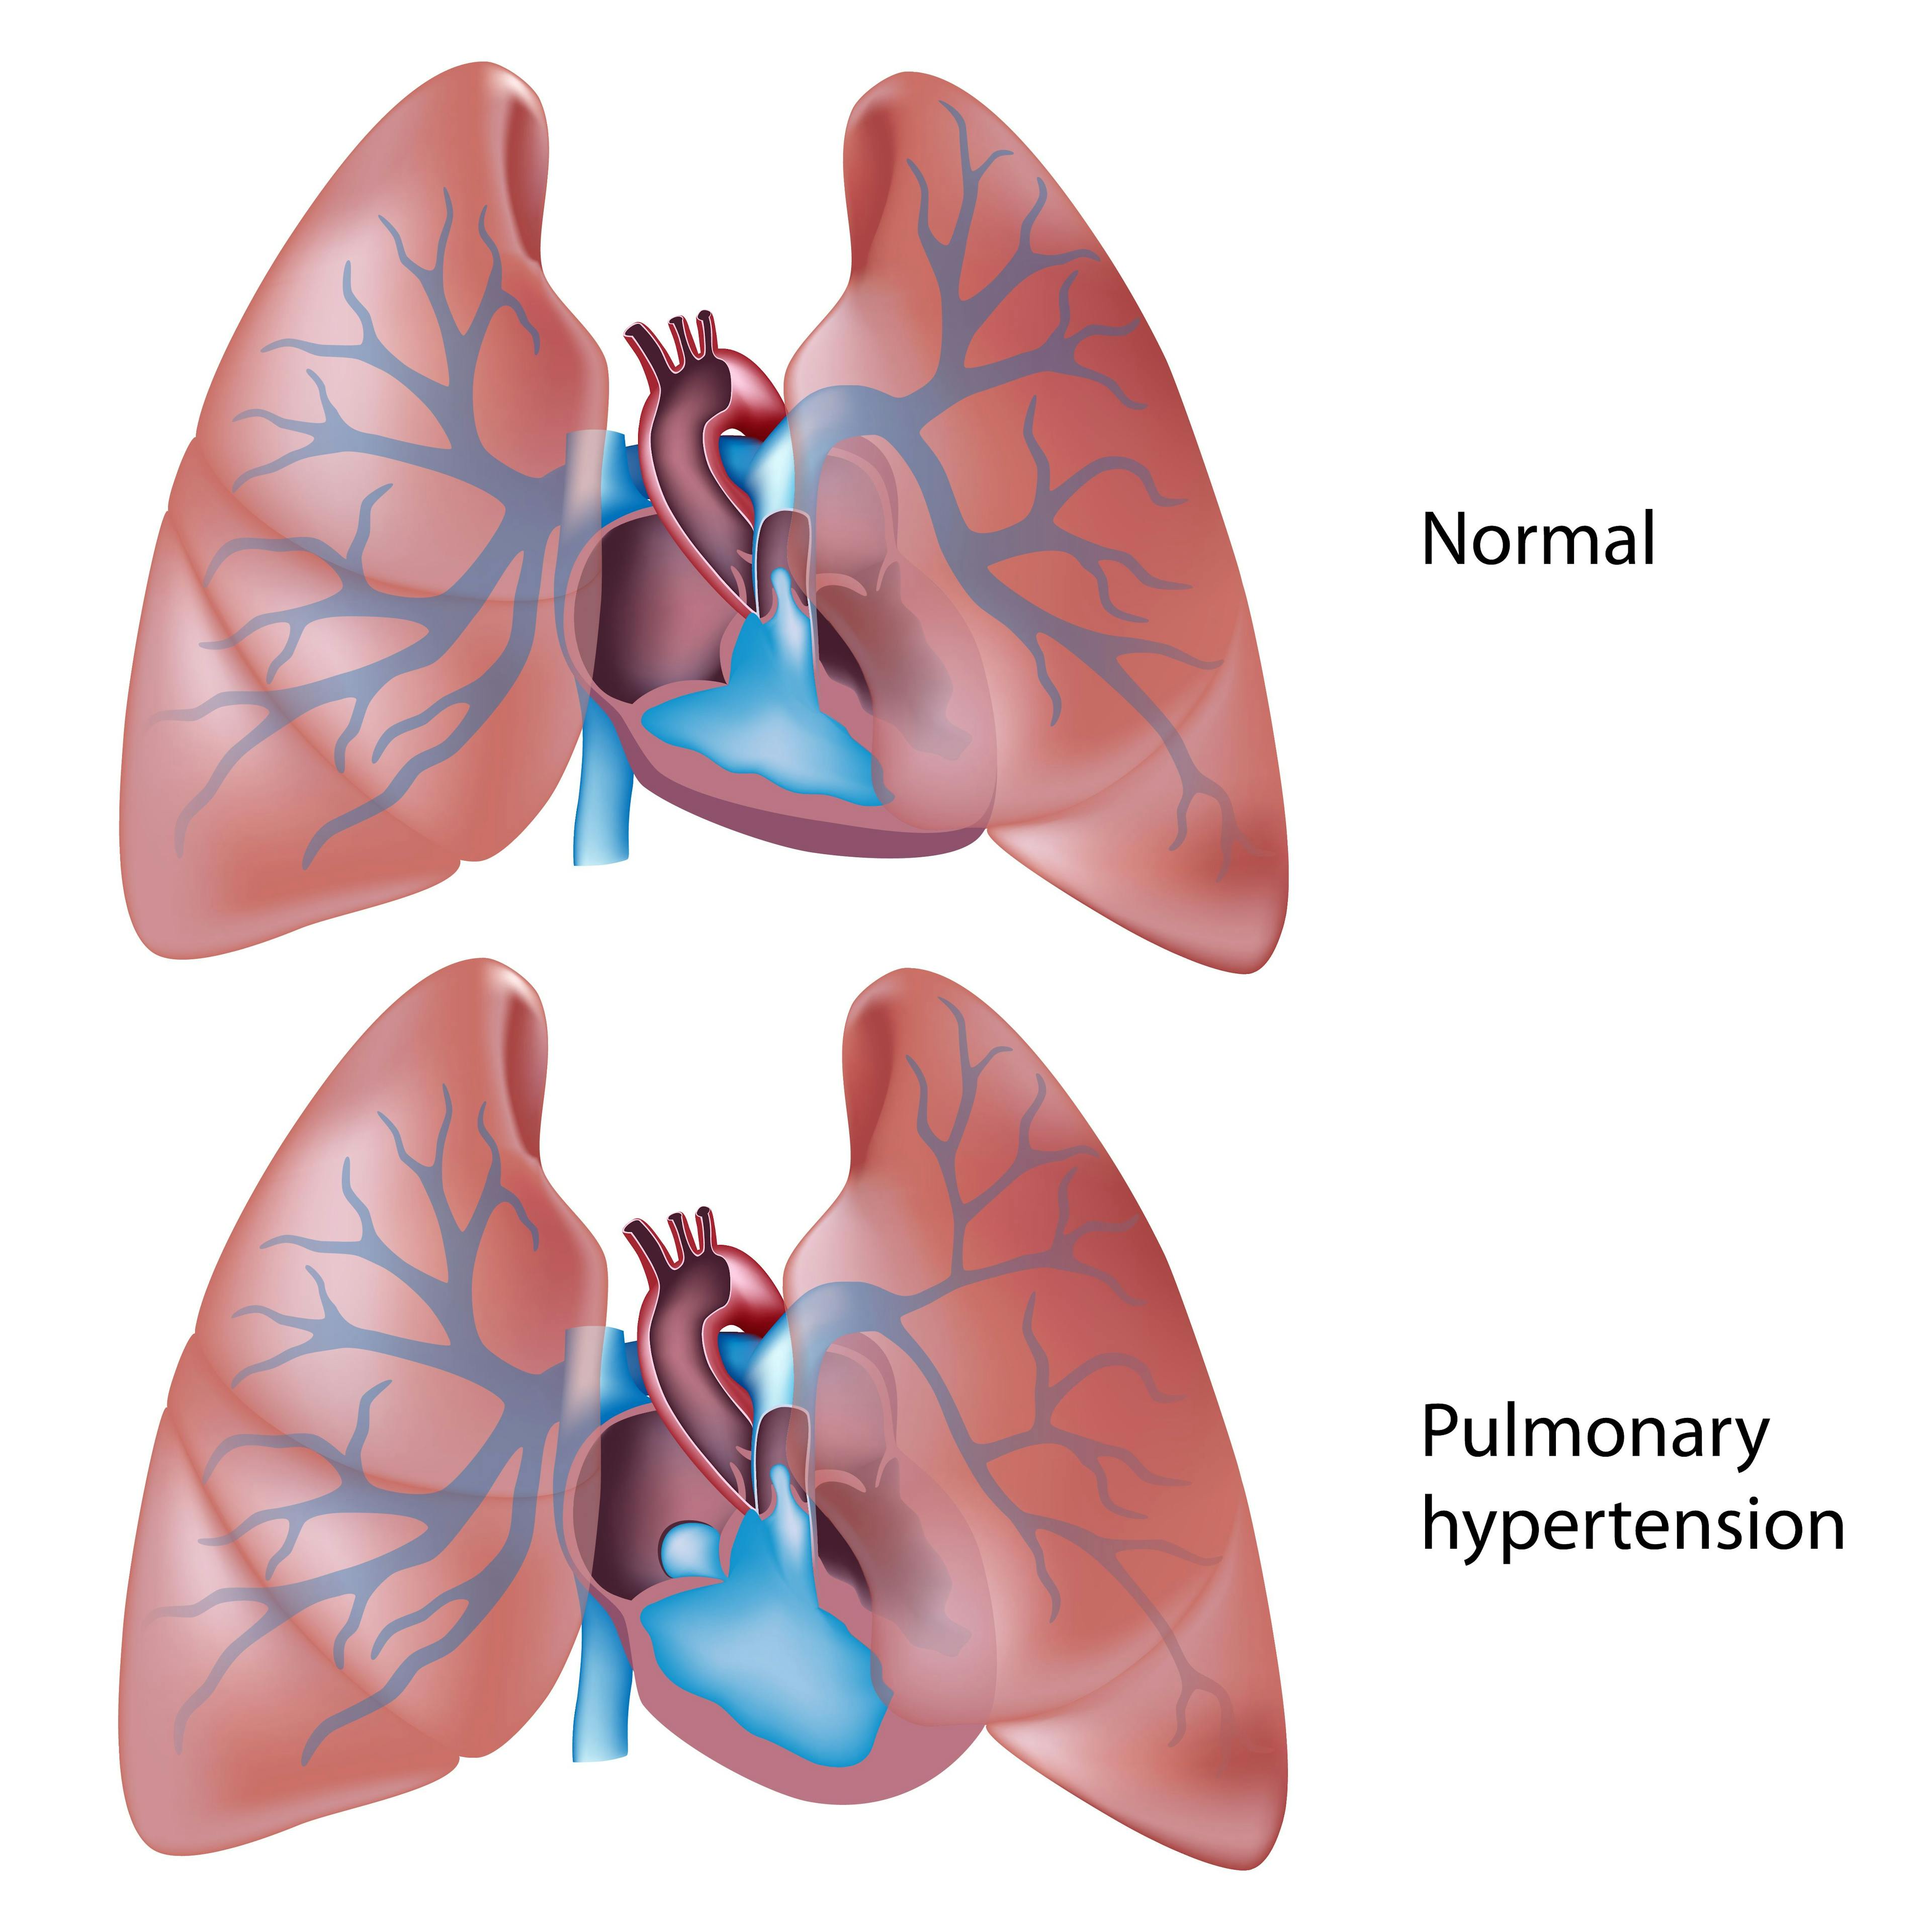 Pulmonary arterial hypertension | Image credit: Alila Medical Media - stock.adobe.com